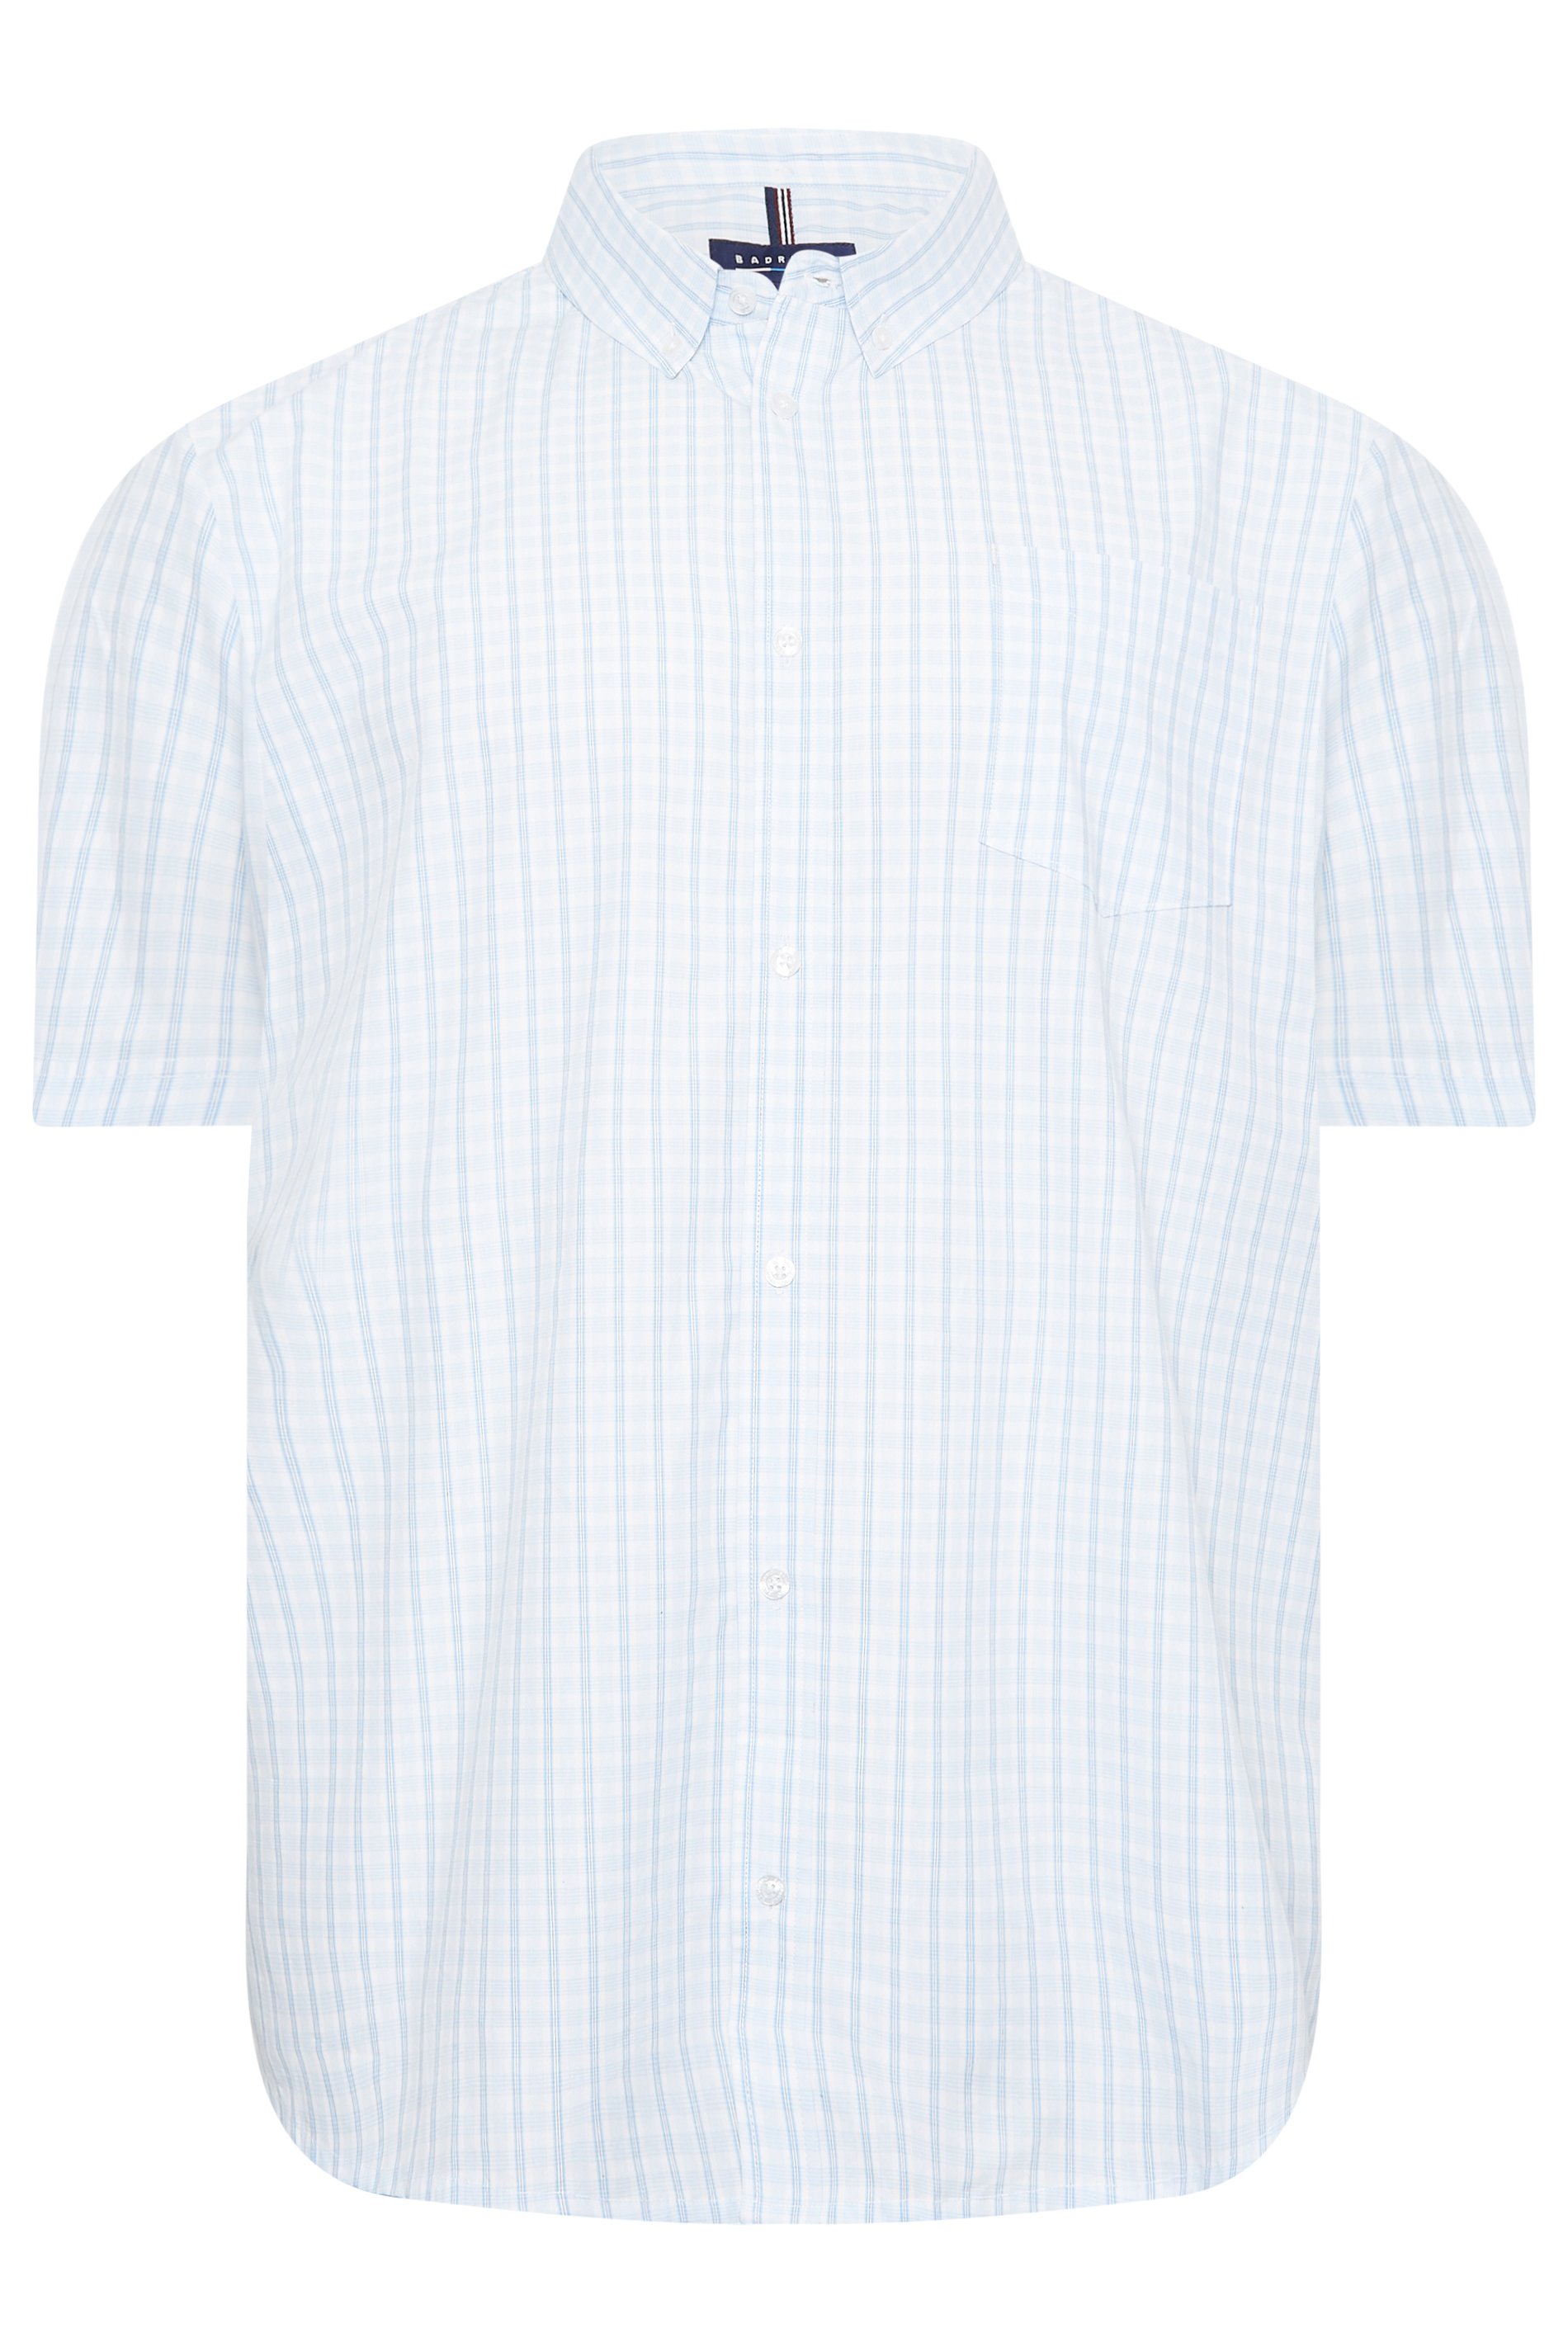 BadRhino Big & Tall Plus Size Light Blue Check Short Sleeve Shirt | BadRhino 3